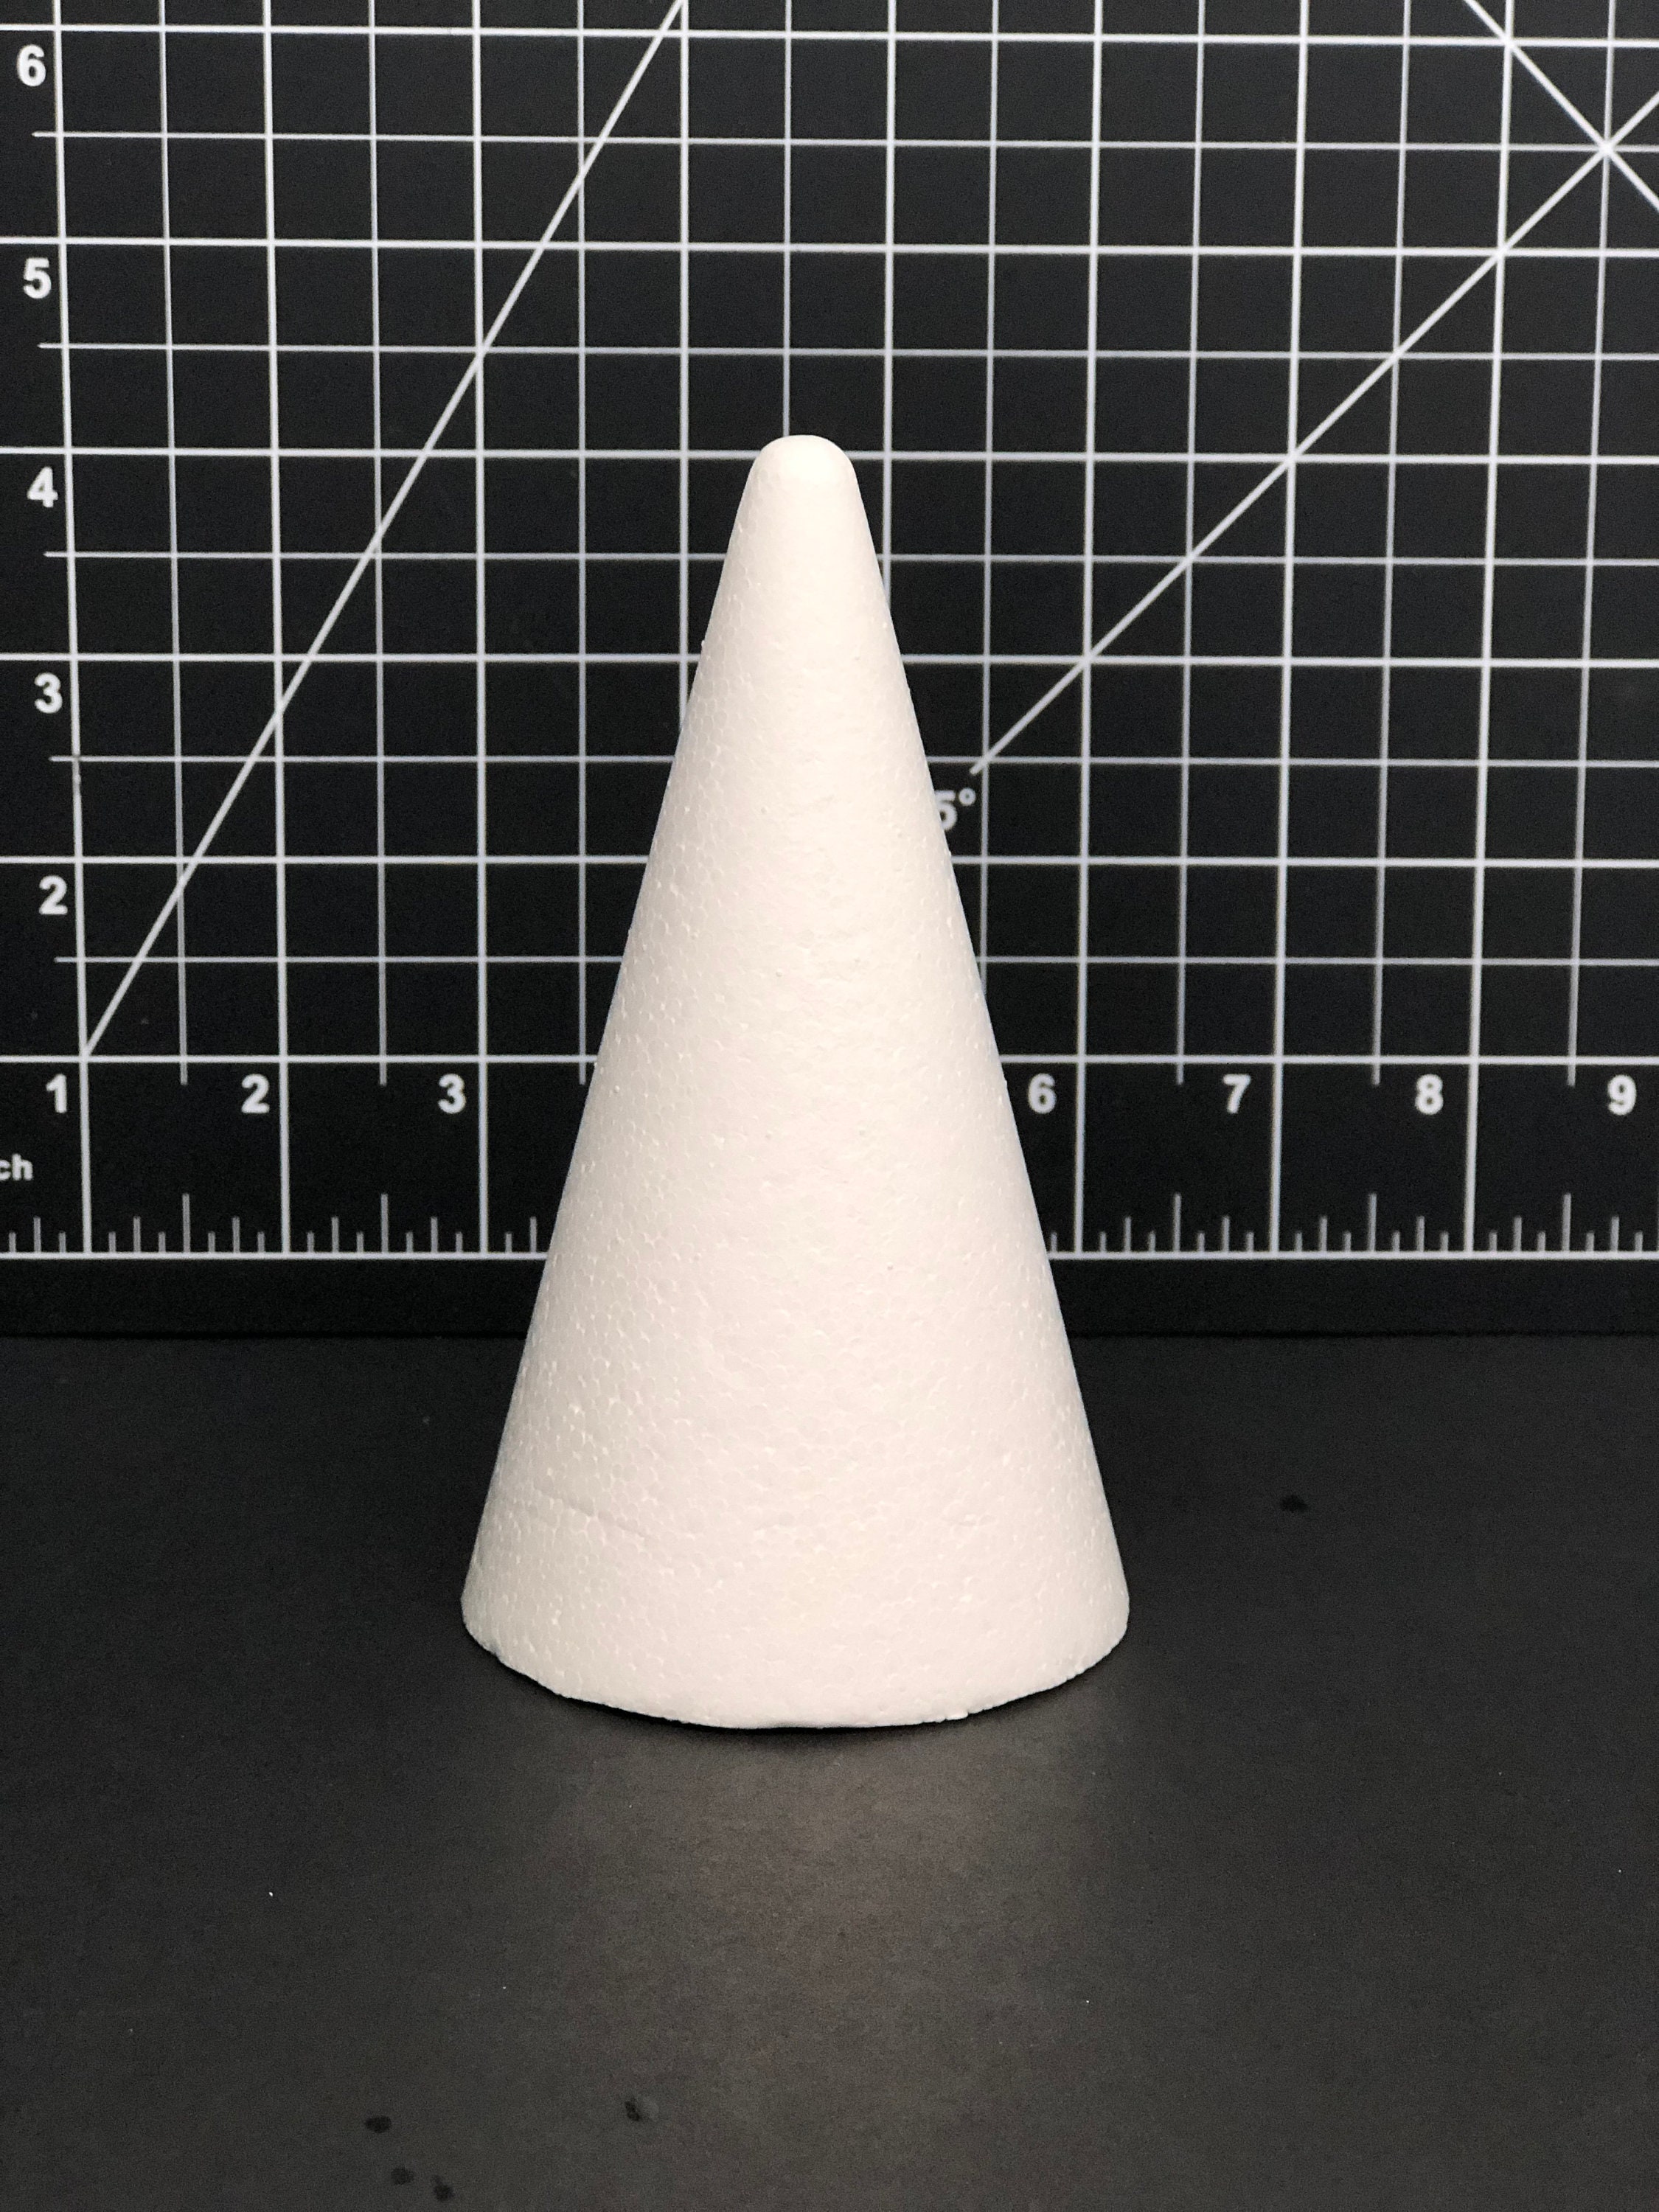 Floracraft Styrofoam Cone-Green 9x4